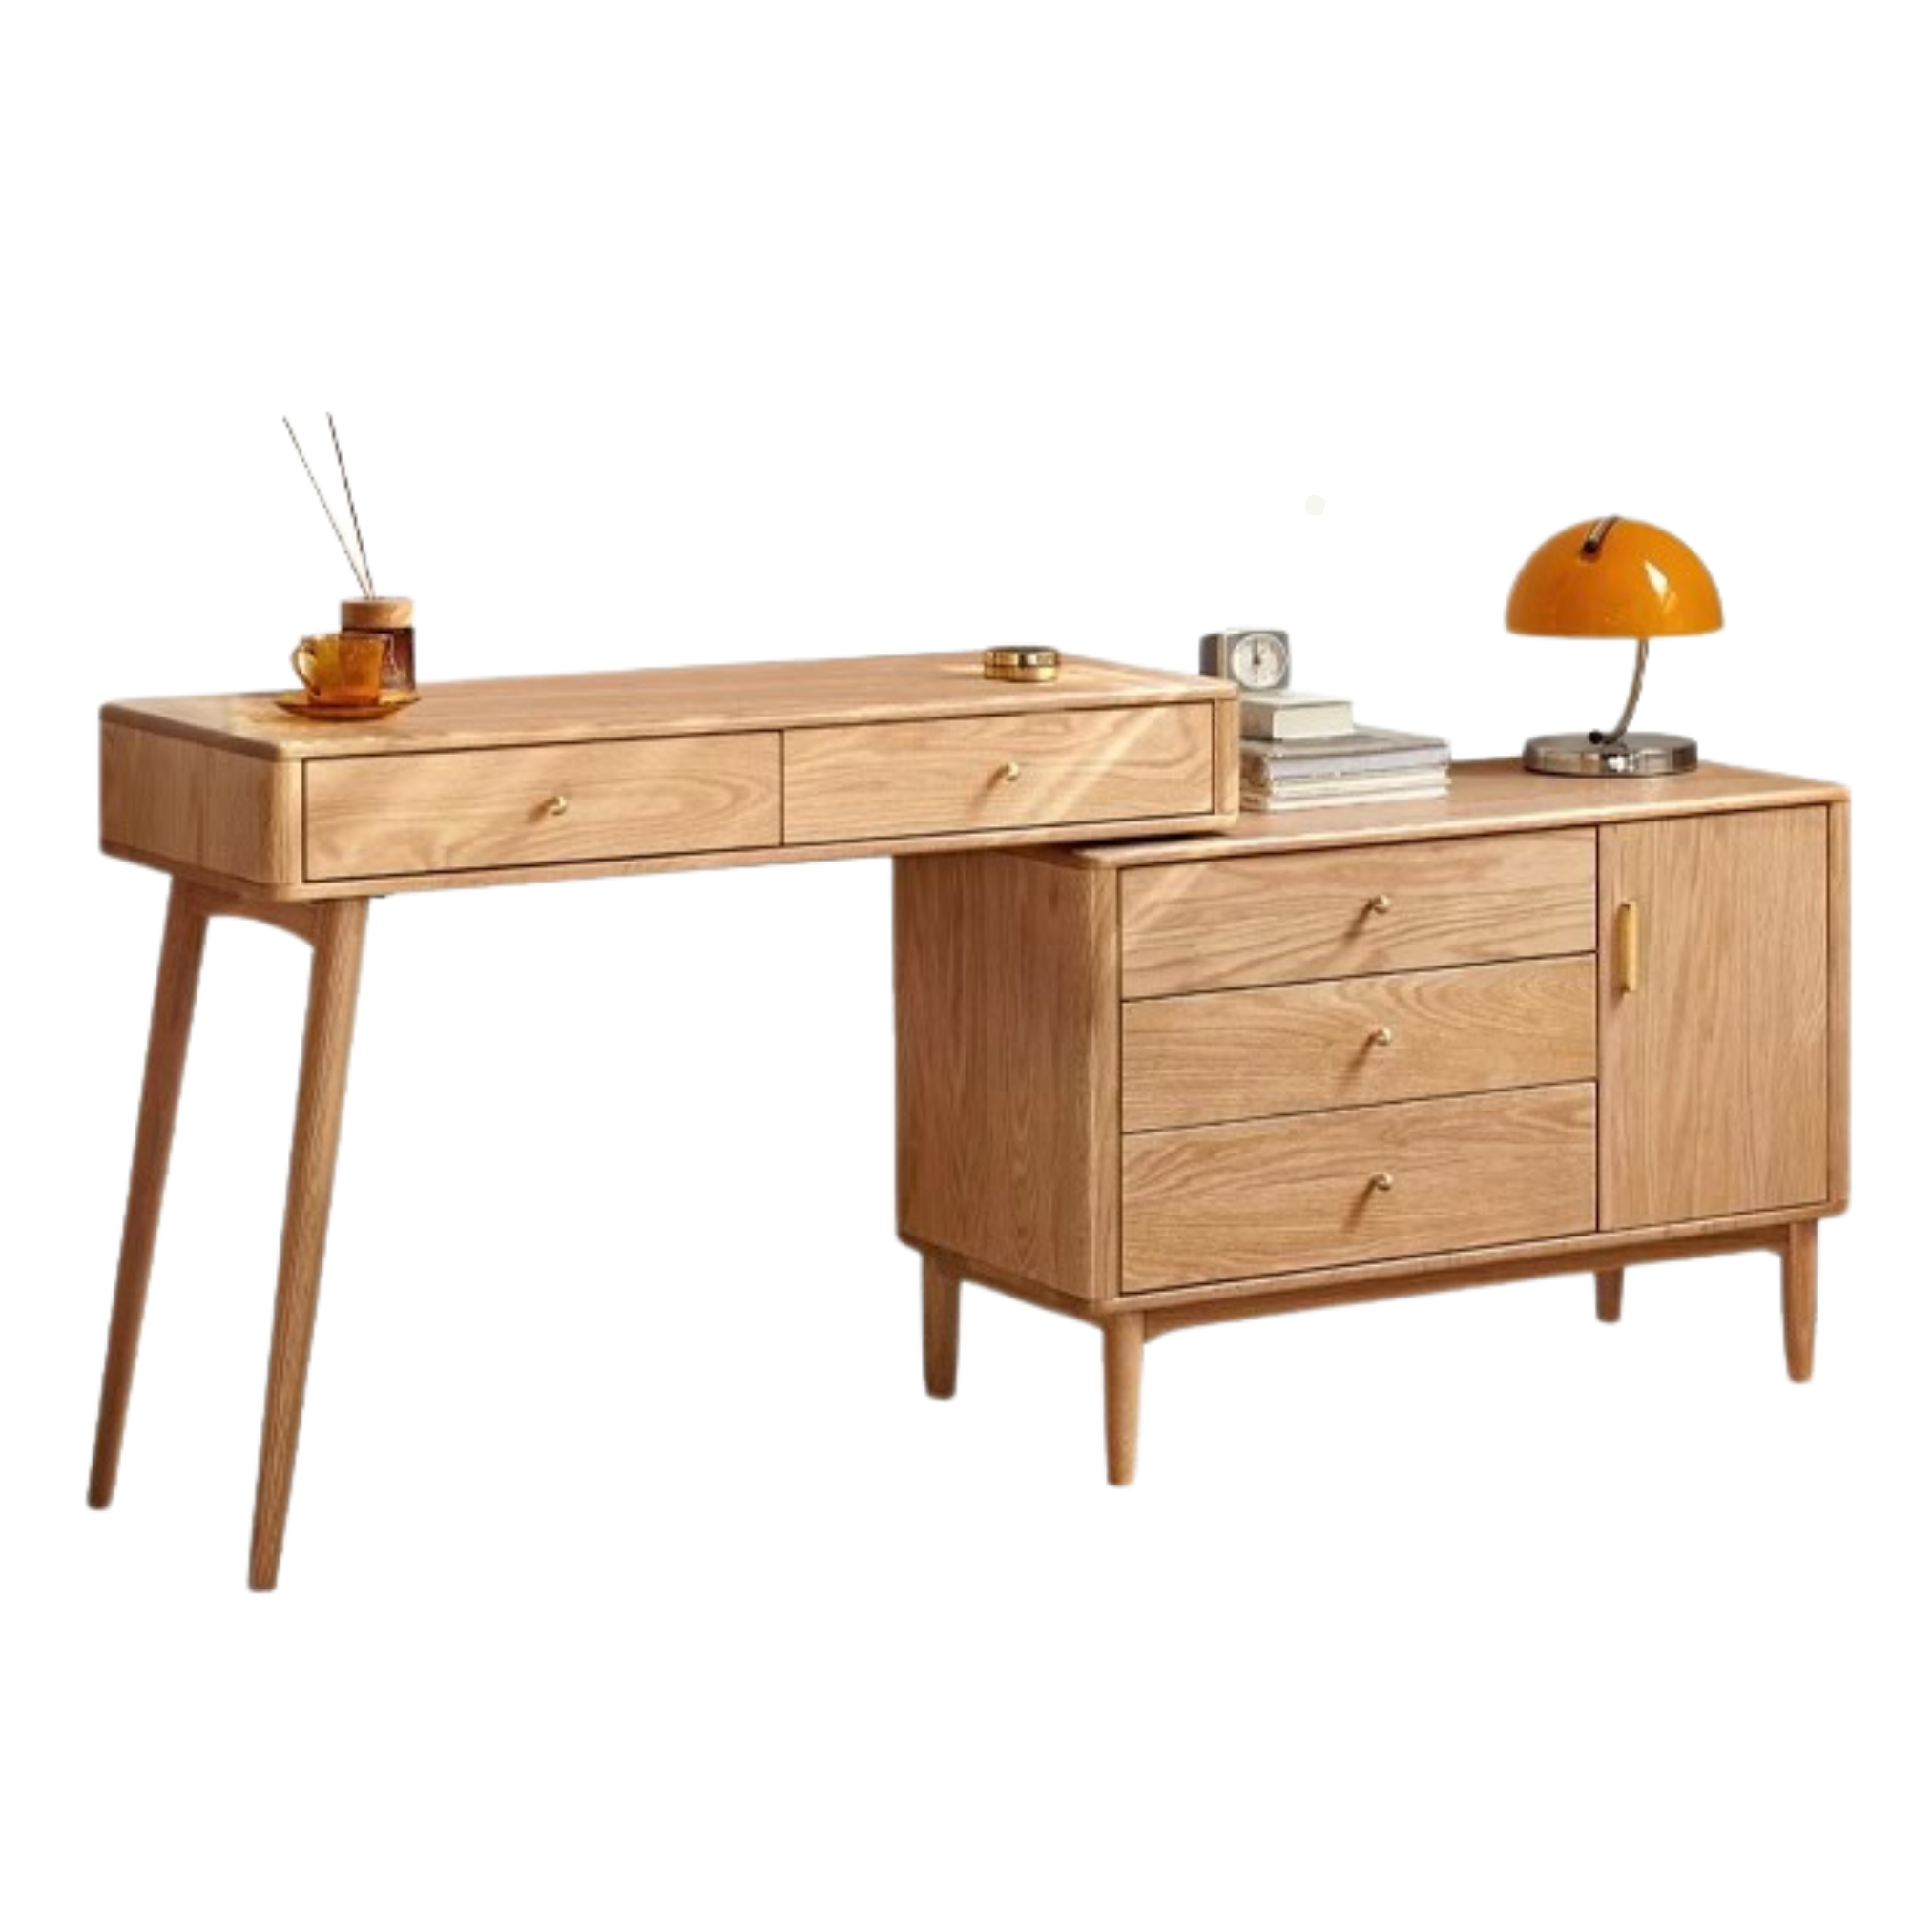 Oak solid wood Dressing table